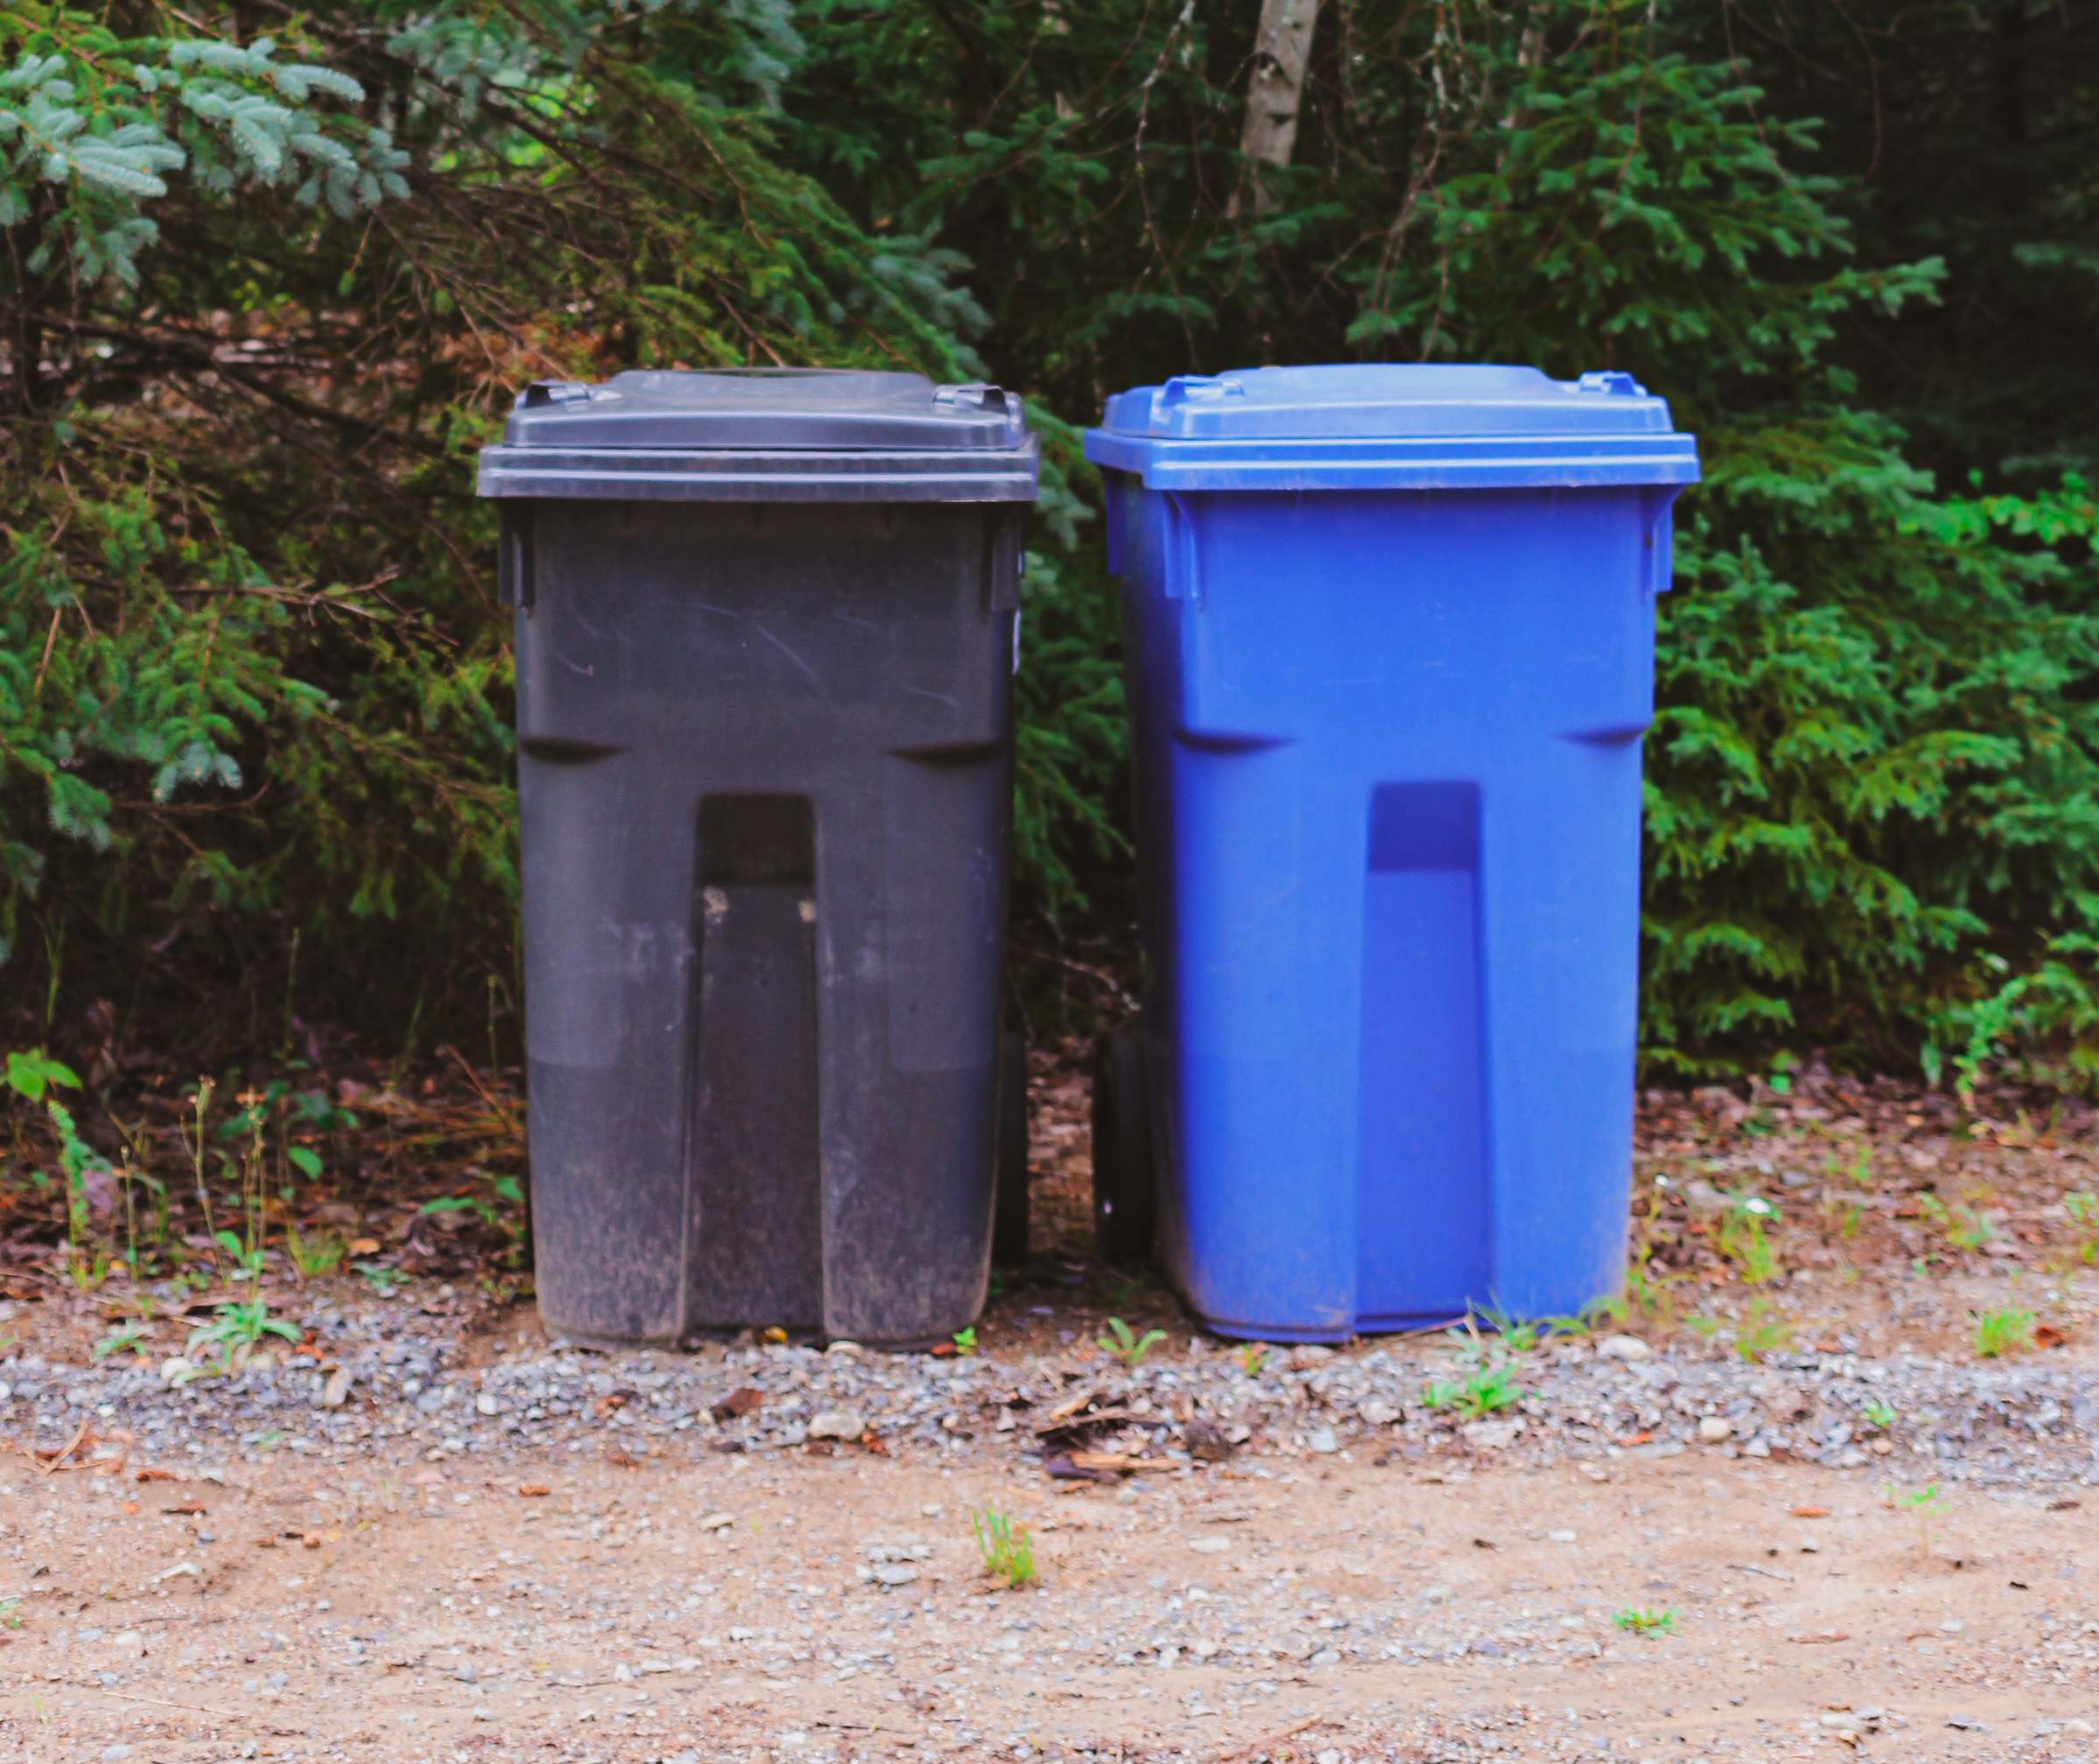 Black and blue trash bins